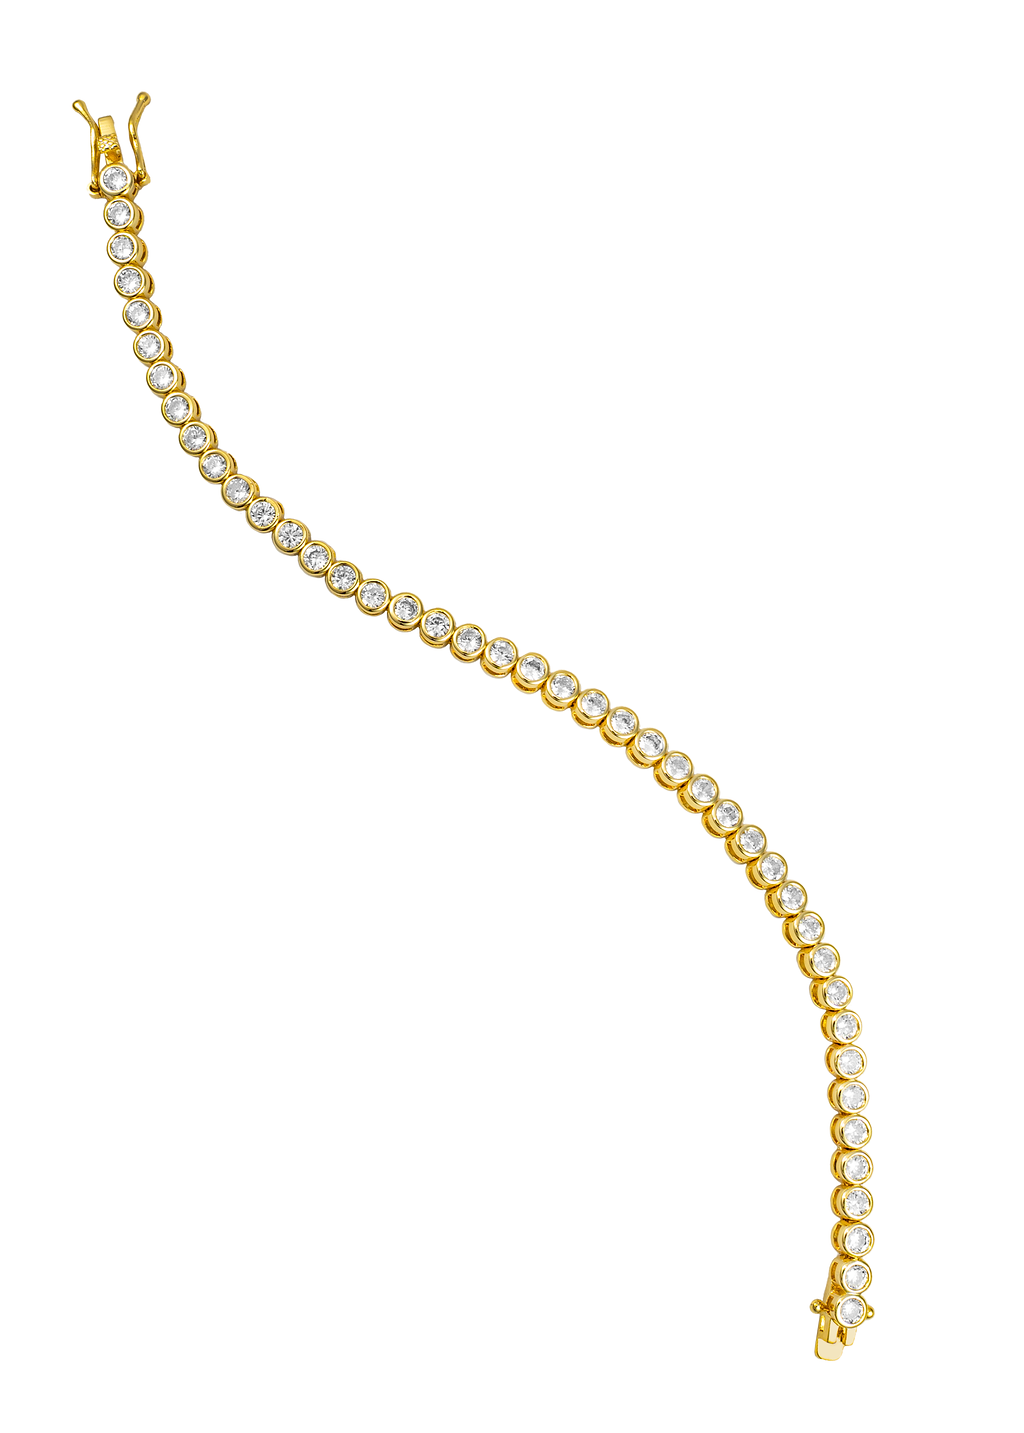 Round Bezel Tennis Necklace / Bracelet with Cubic Zirconia Stones (H99)(I448)